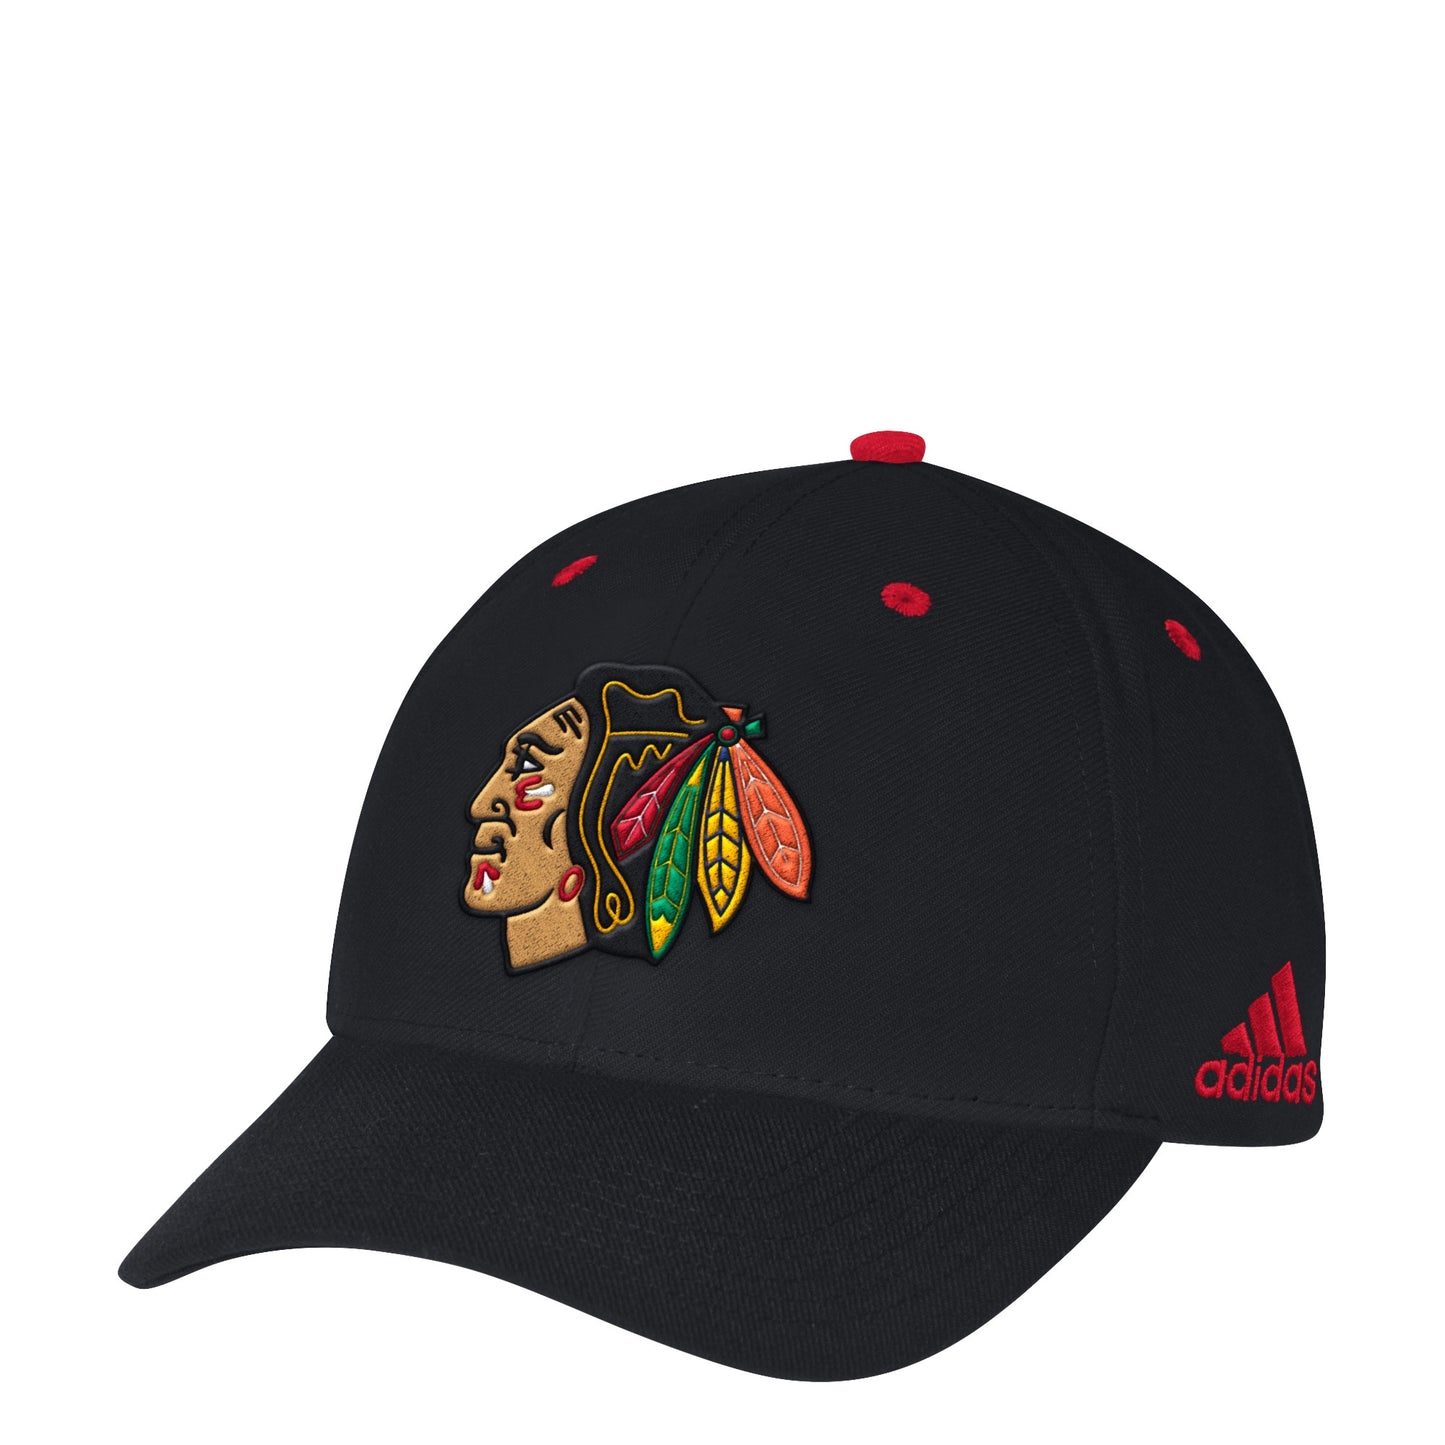 Men’s Chicago Blackhawks Basic Structured Adjustable Hat By Adidas